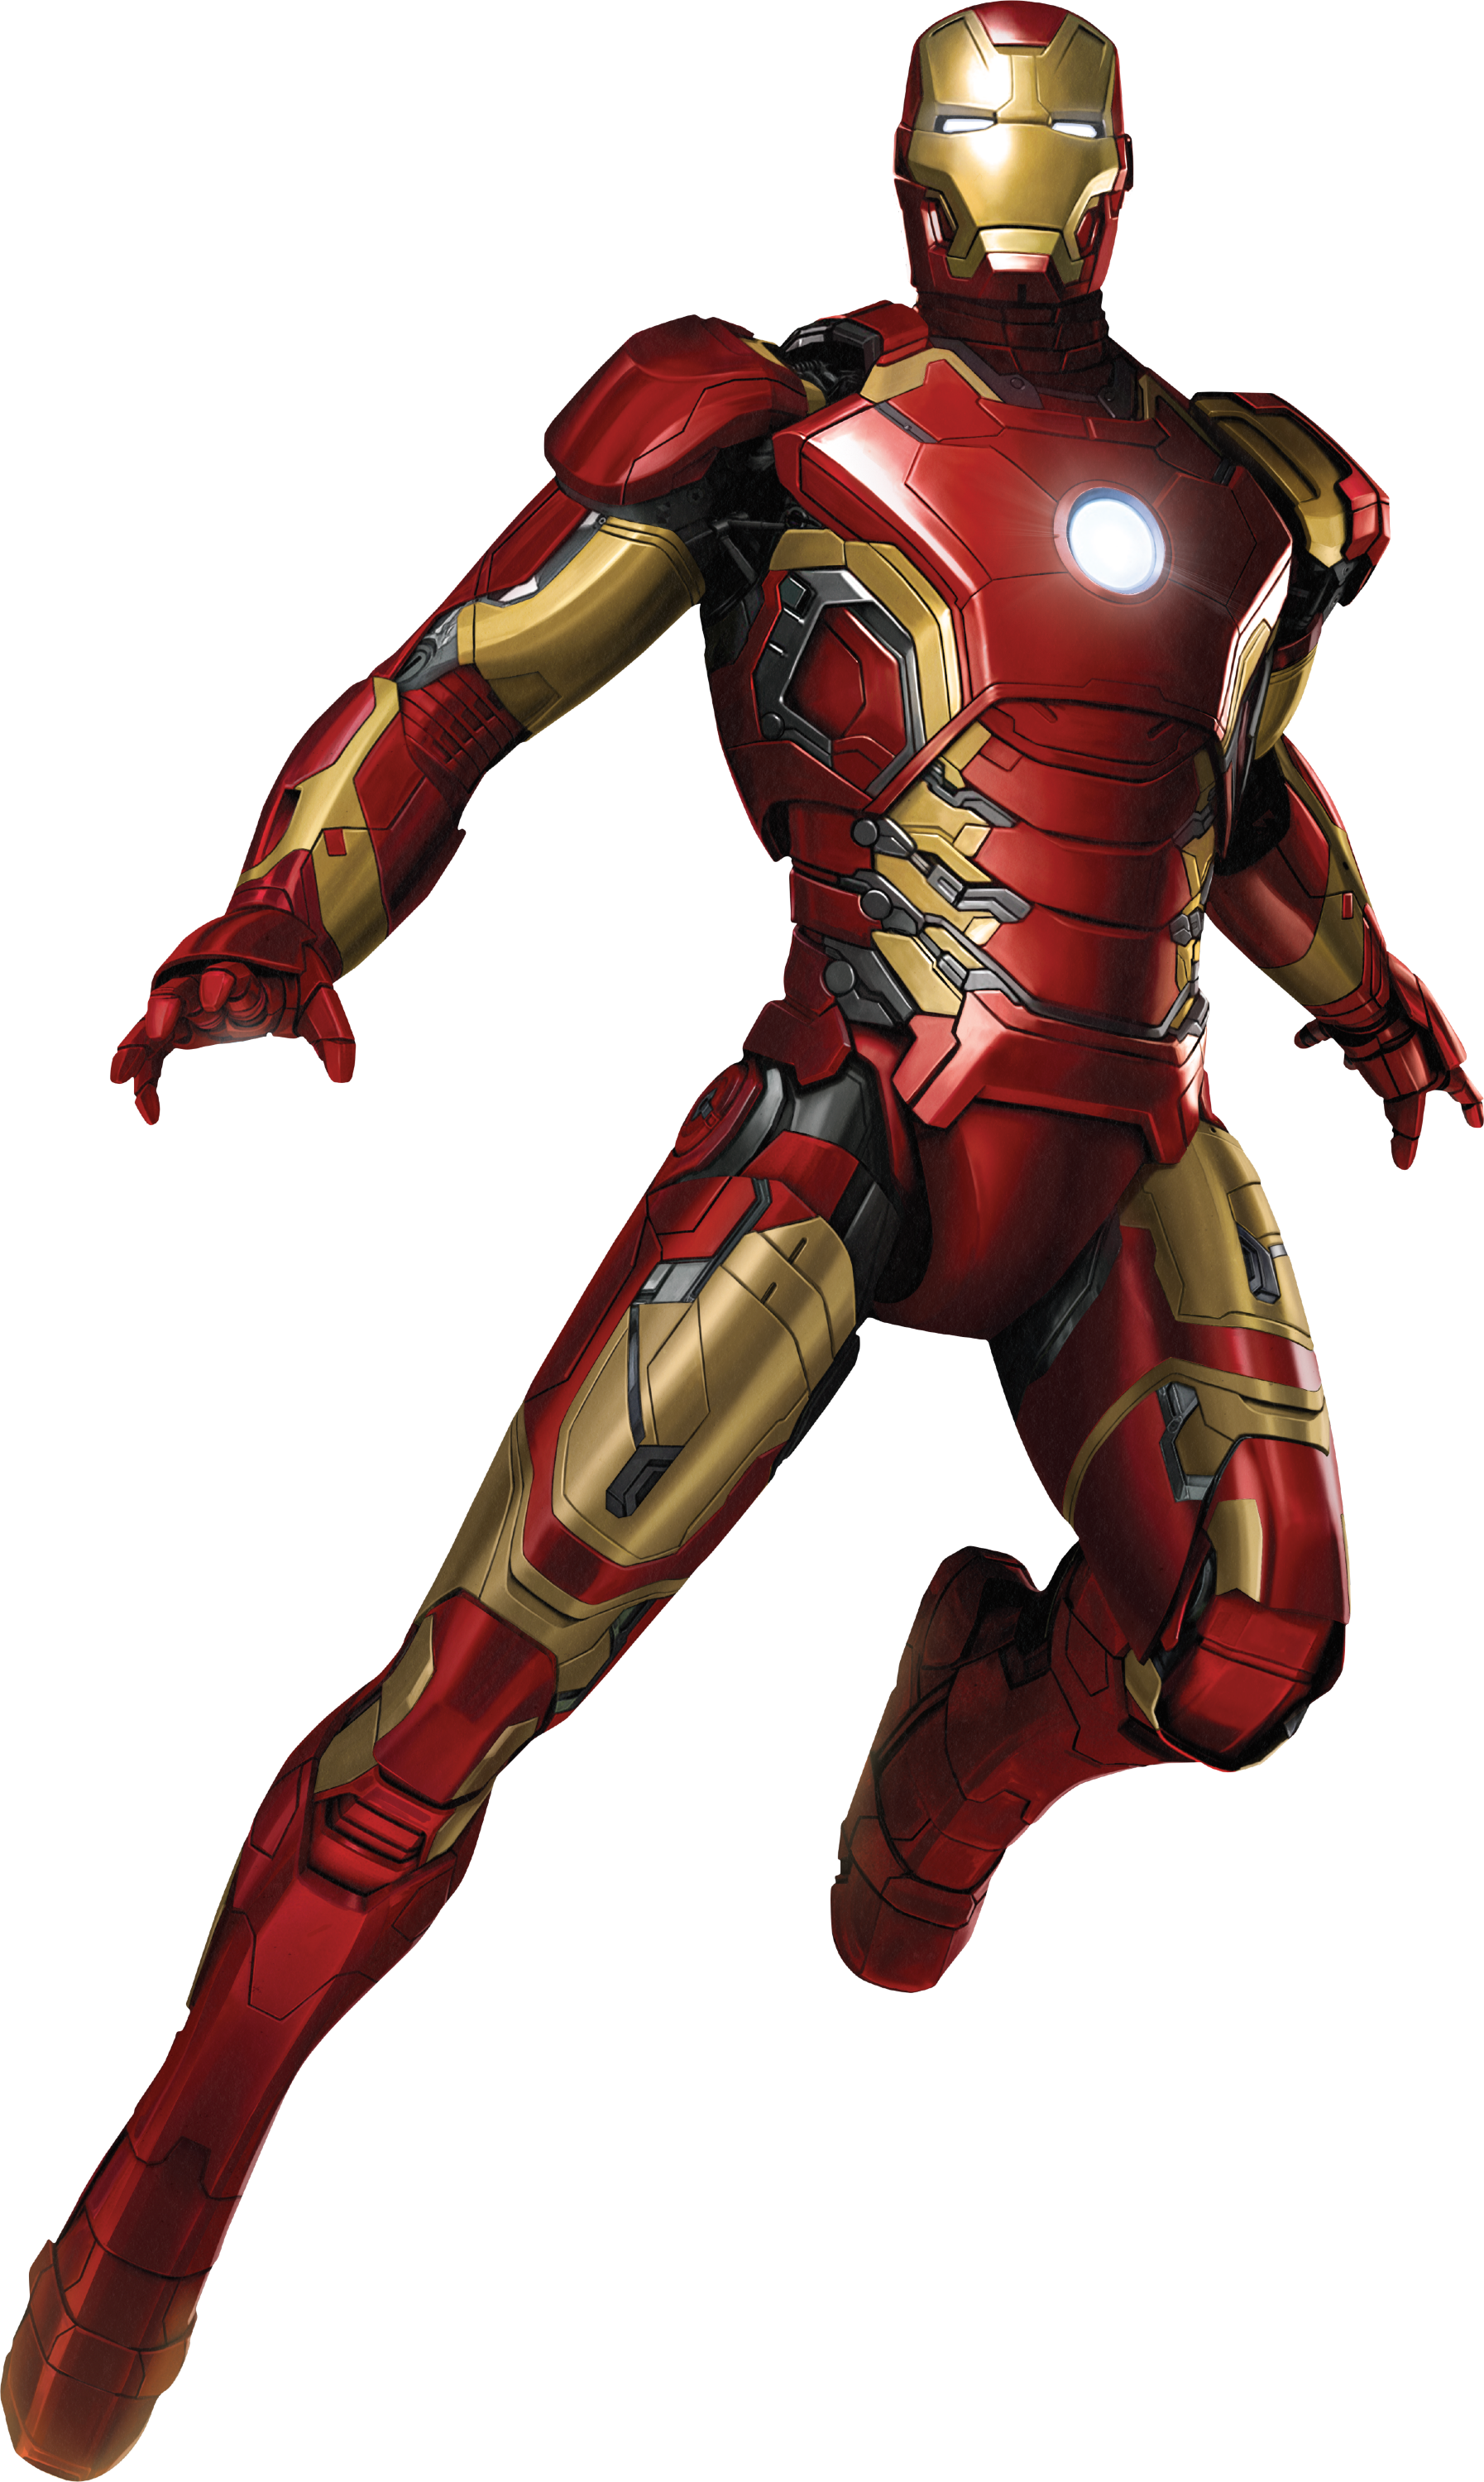 Iron Man #18